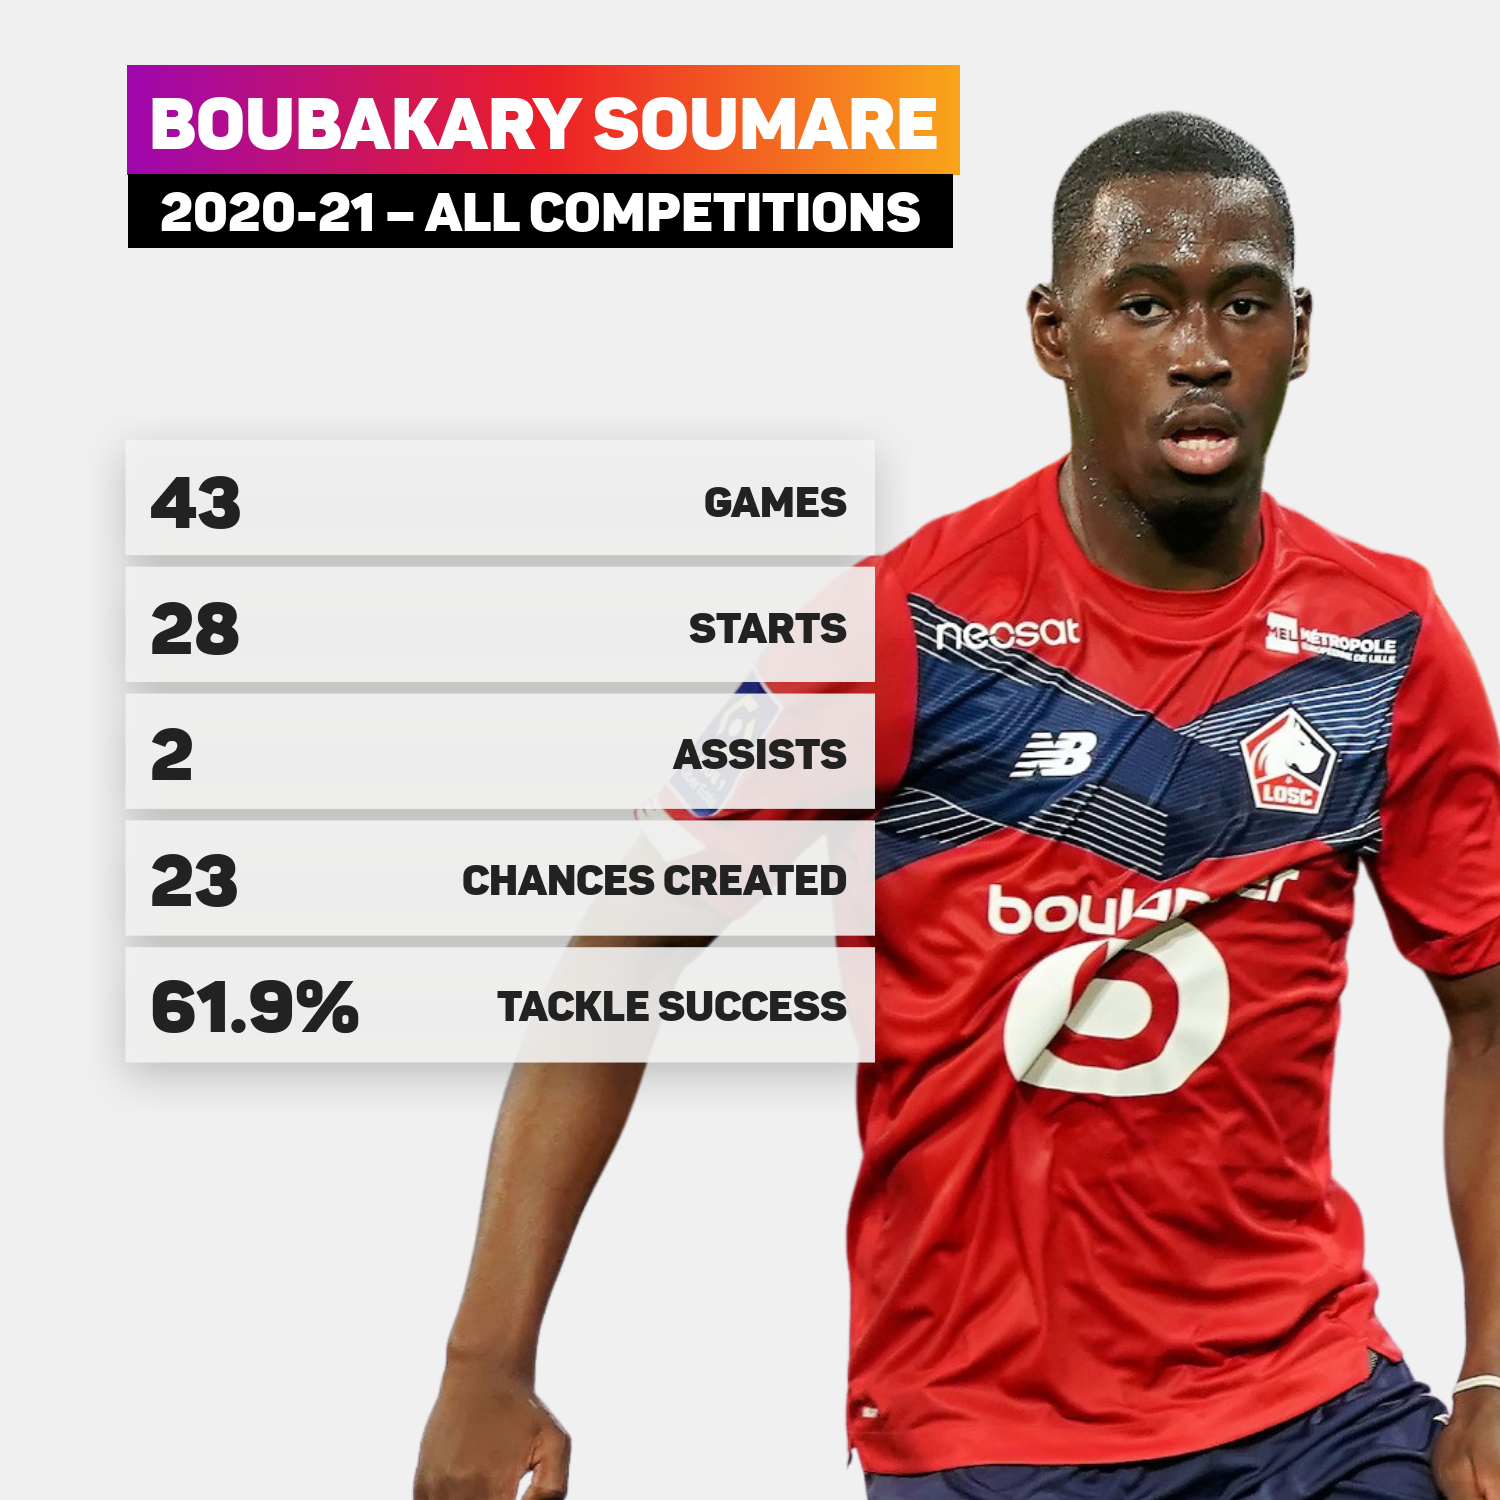 All-action midfielder Boubakary Soumare